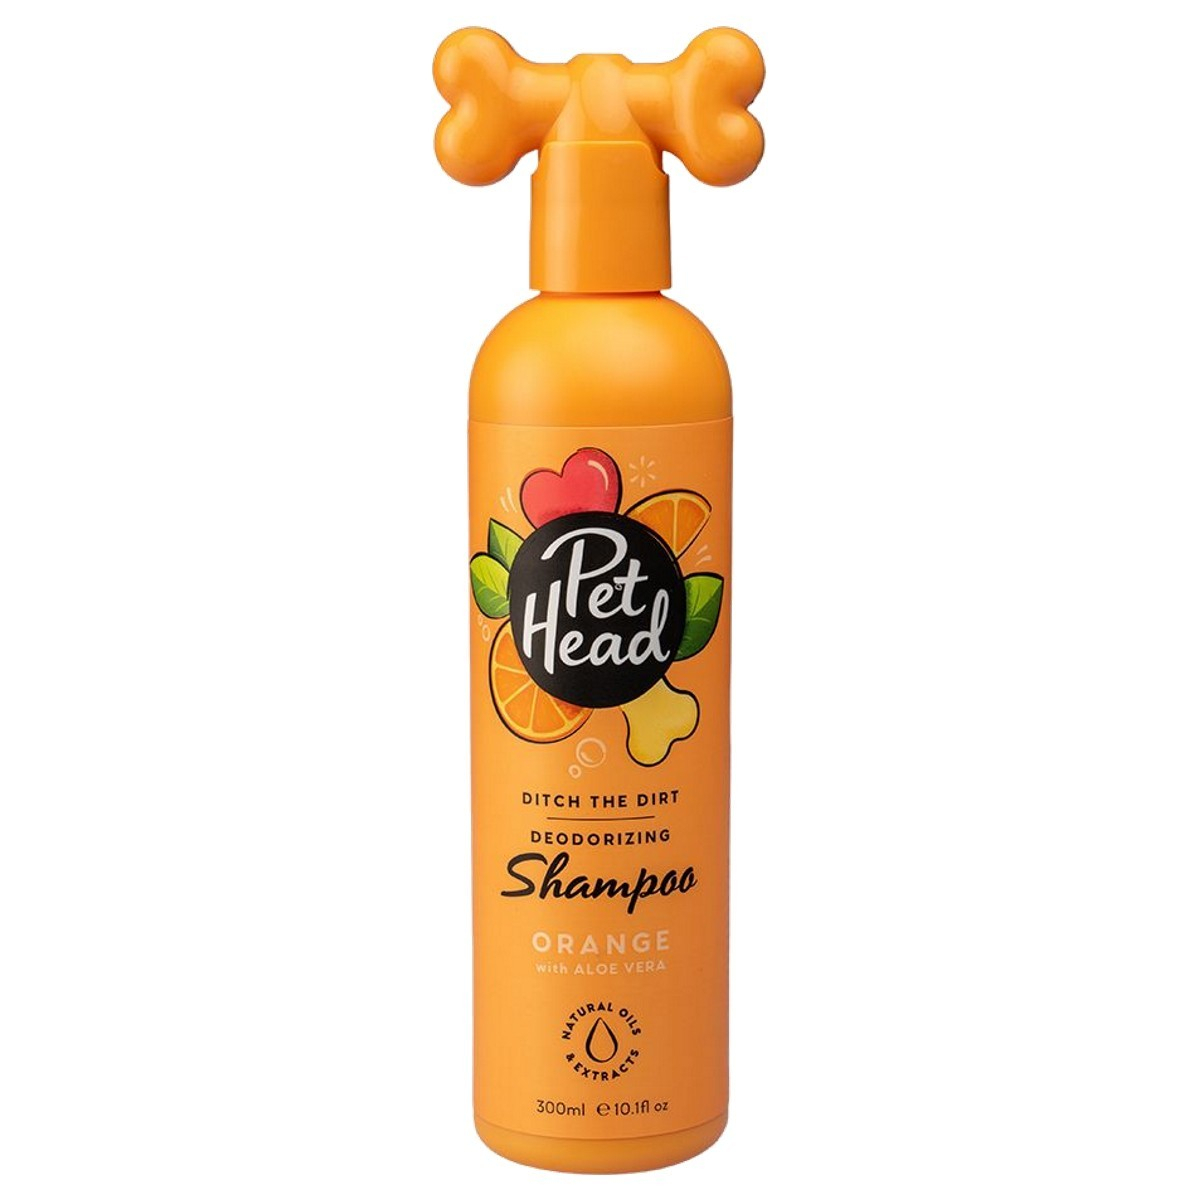 Sanftes Shampoo - Spezial Deodorant -300ml - Ditch The Dirt Pet Head